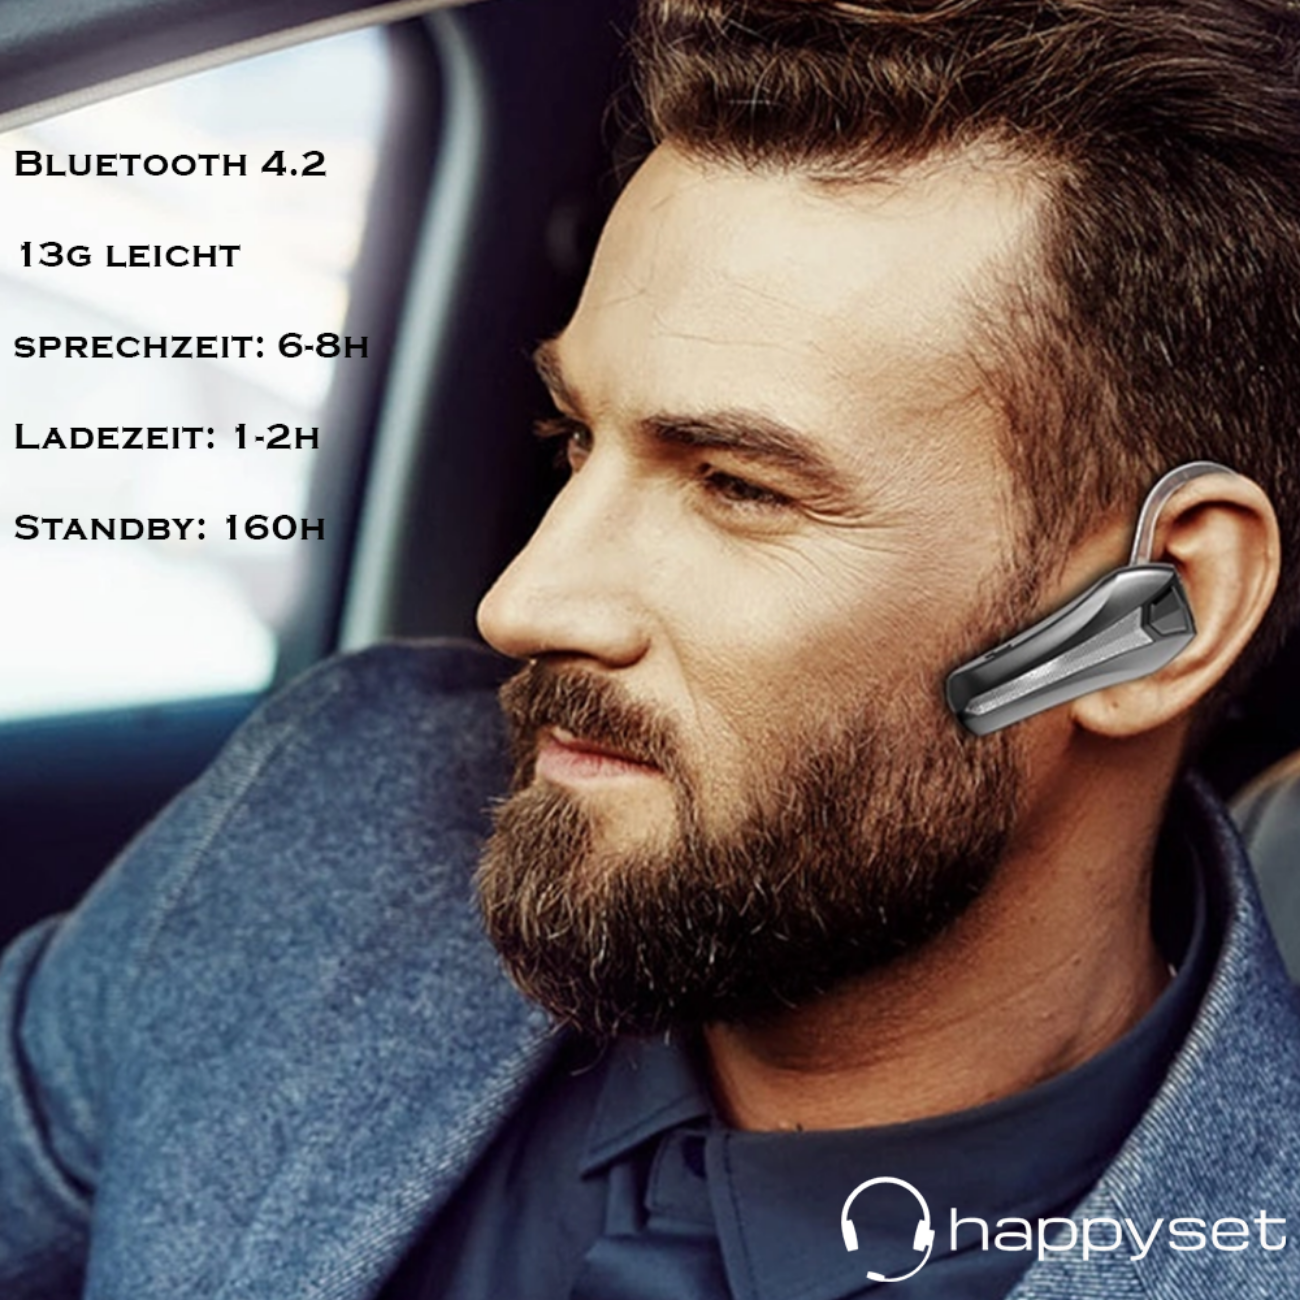 Short, Headset Bluetooth Bluetooth HAPPYSET Schwarz In-ear